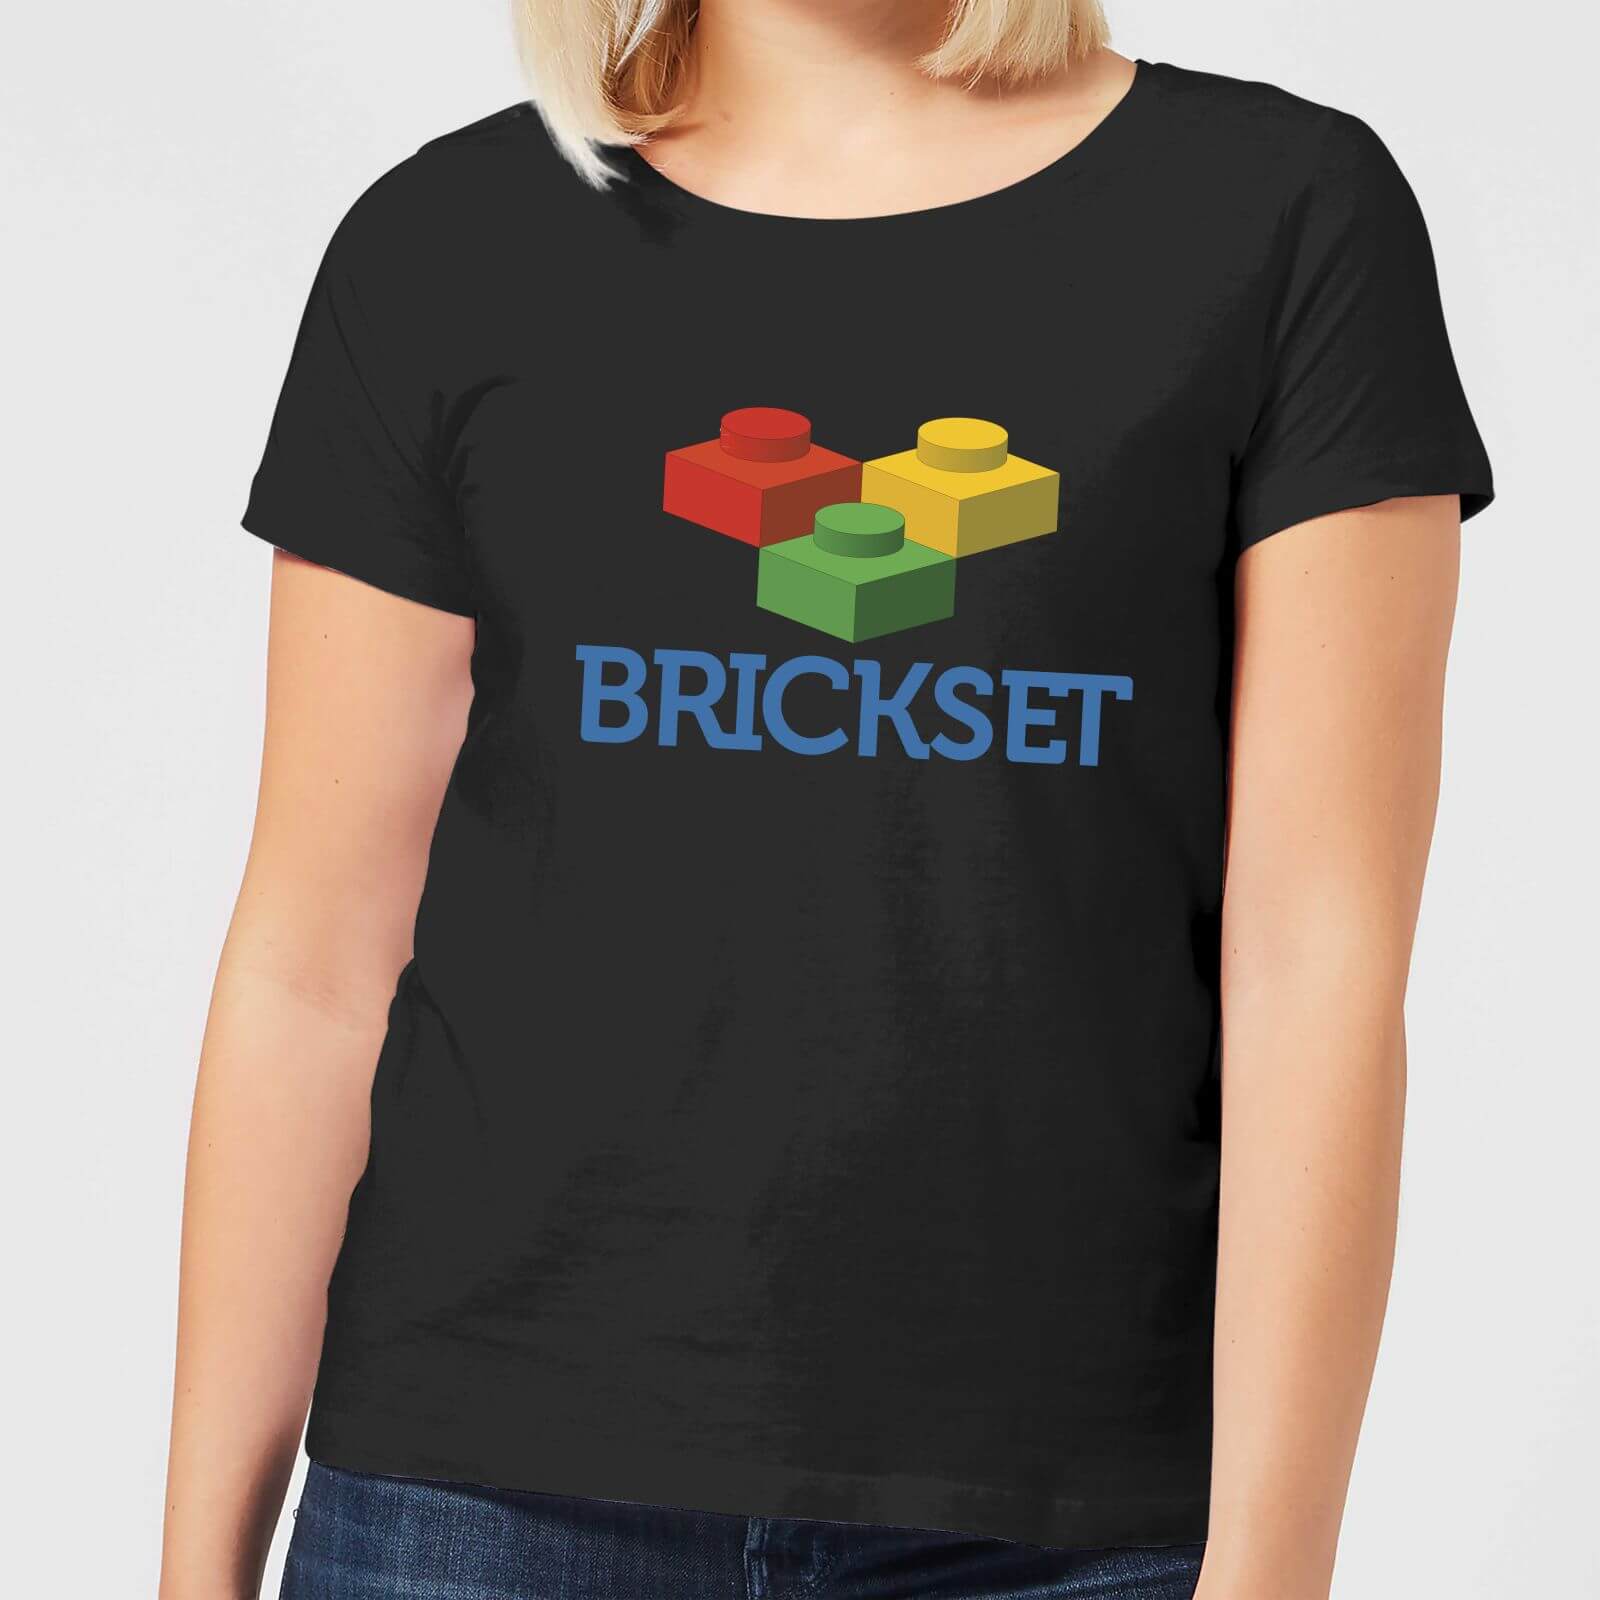 Brickset Logo Women's T-Shirt - Black - S - Black